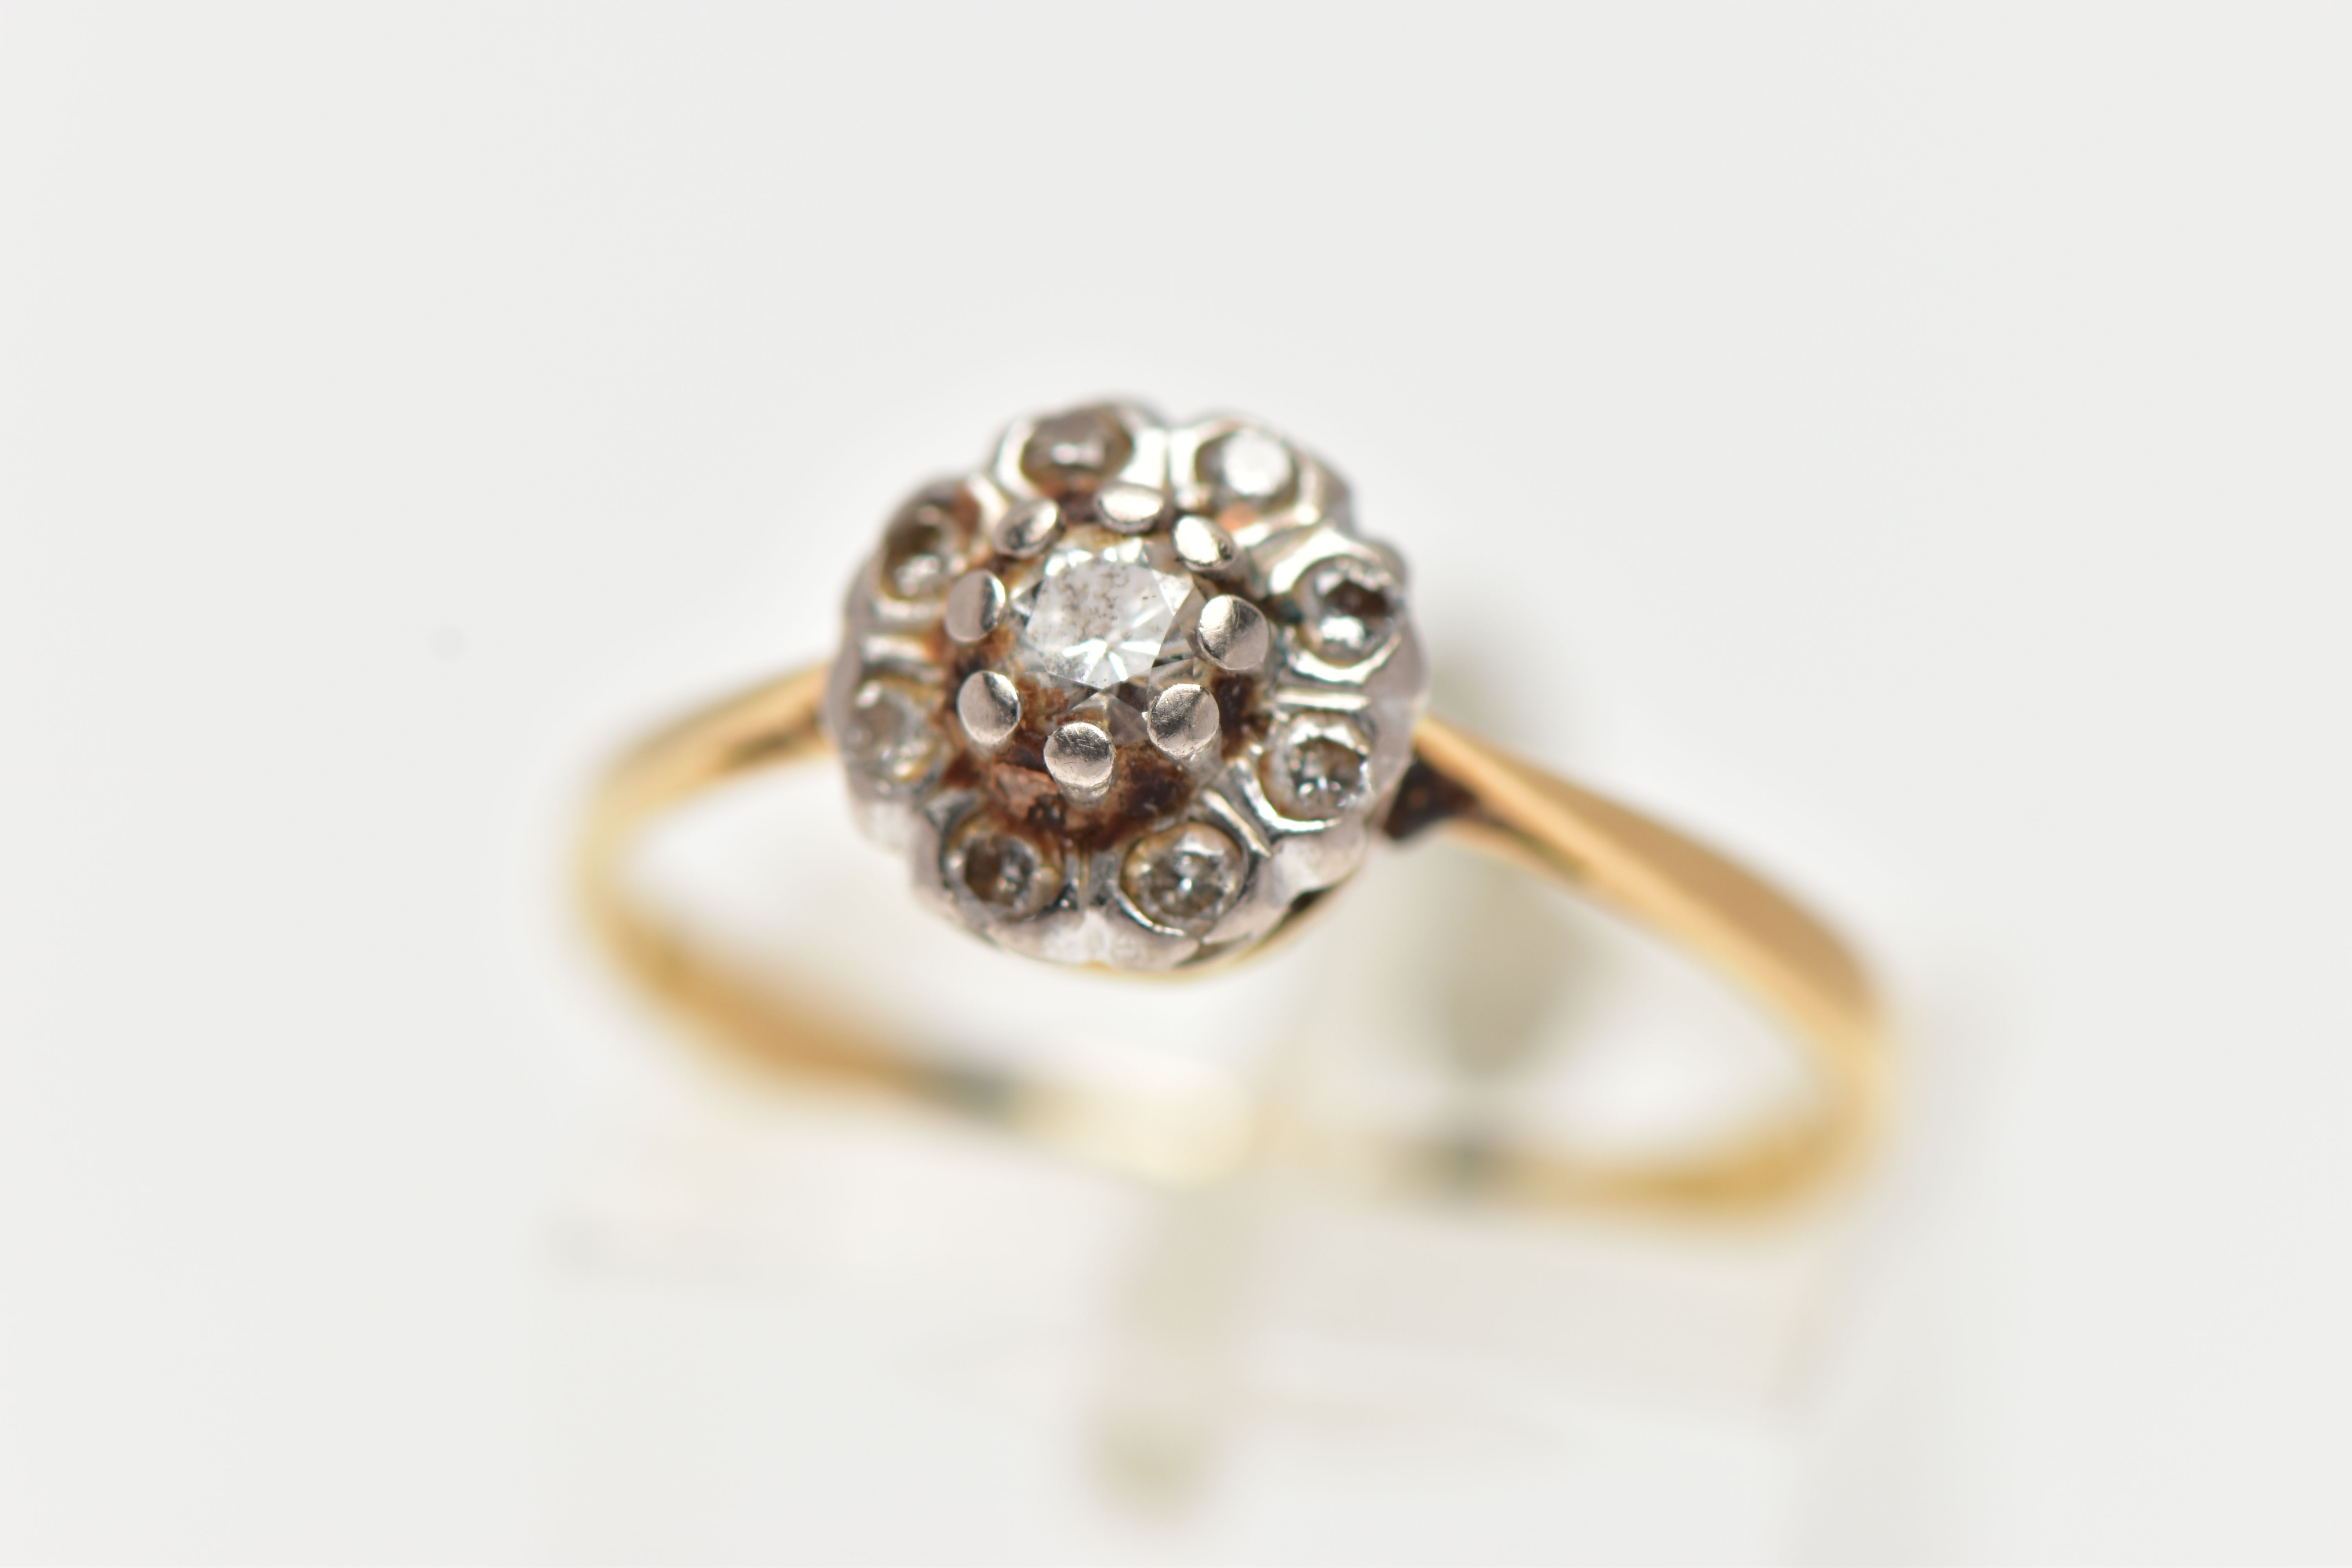 A YELLOW METAL DIAMOND FLOWER RING, set with nine round brilliant cut diamonds, estimated total